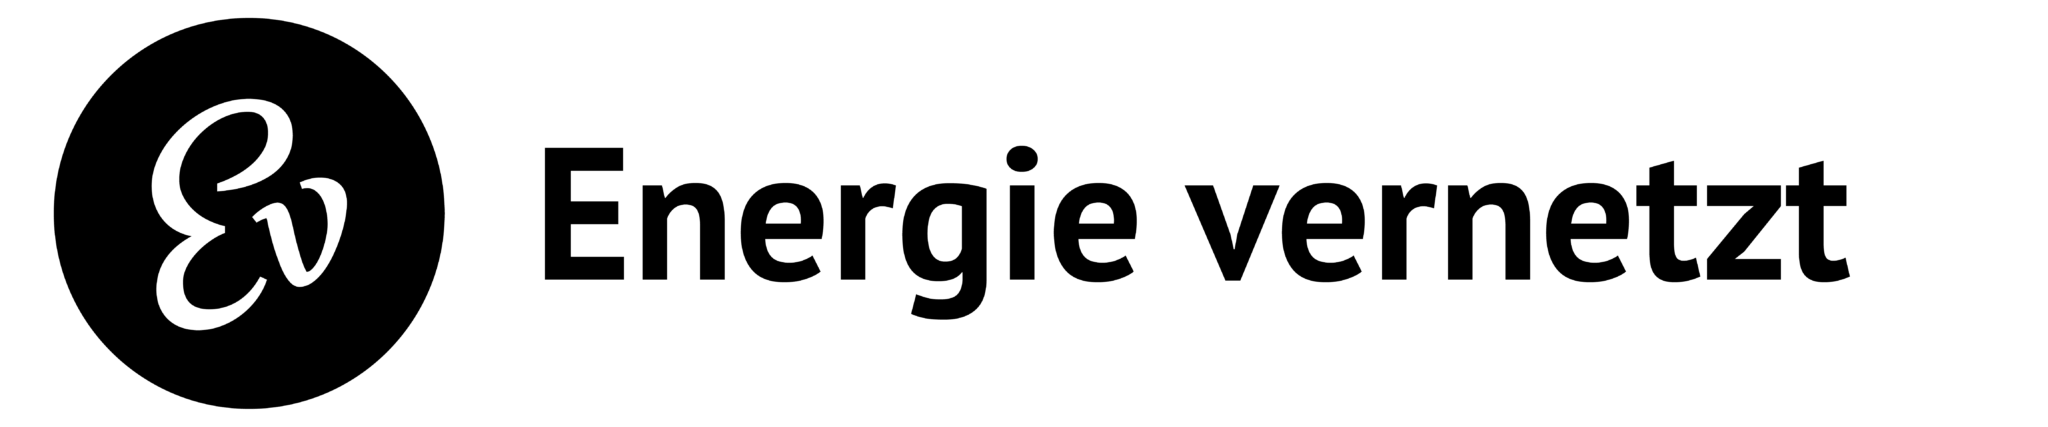 Logo Energie vernetzt